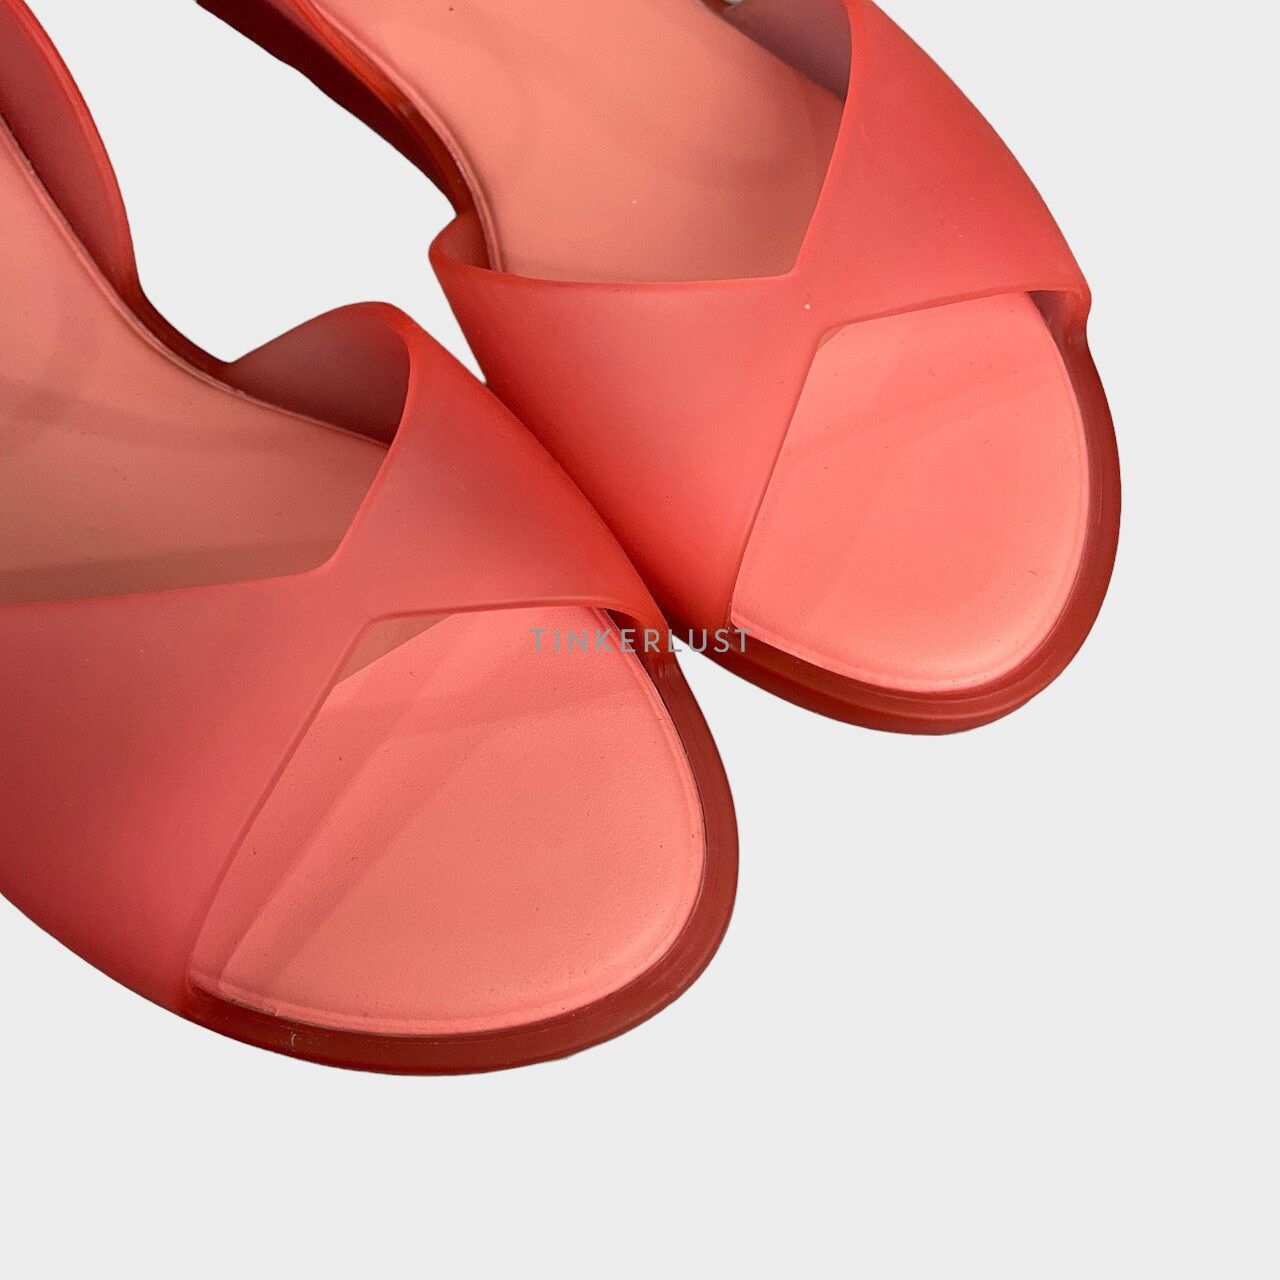 Melissa Silky AD Pink Sandals